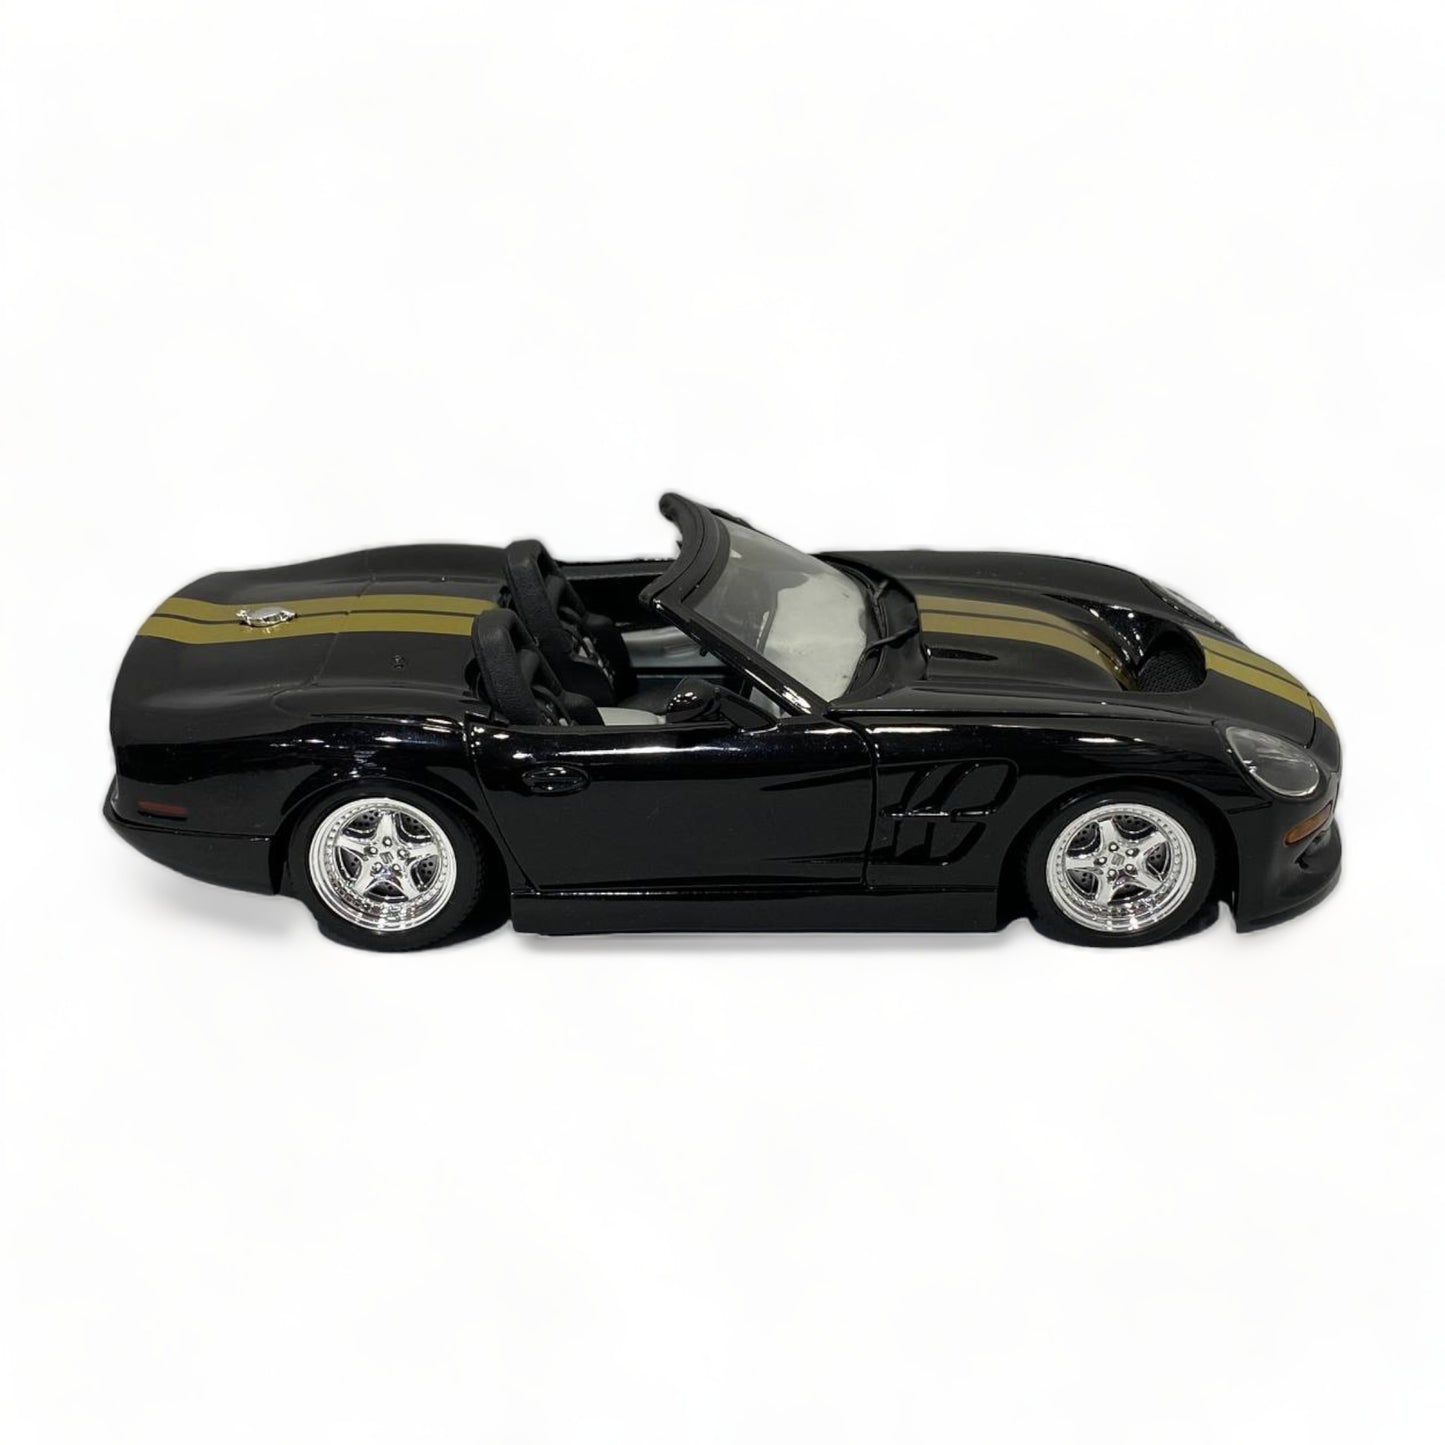 1/18 Diecast Maisto SHELBY SERIES 1 BLACK Scale Model Car|Sold in Dturman.com Dubai UAE.